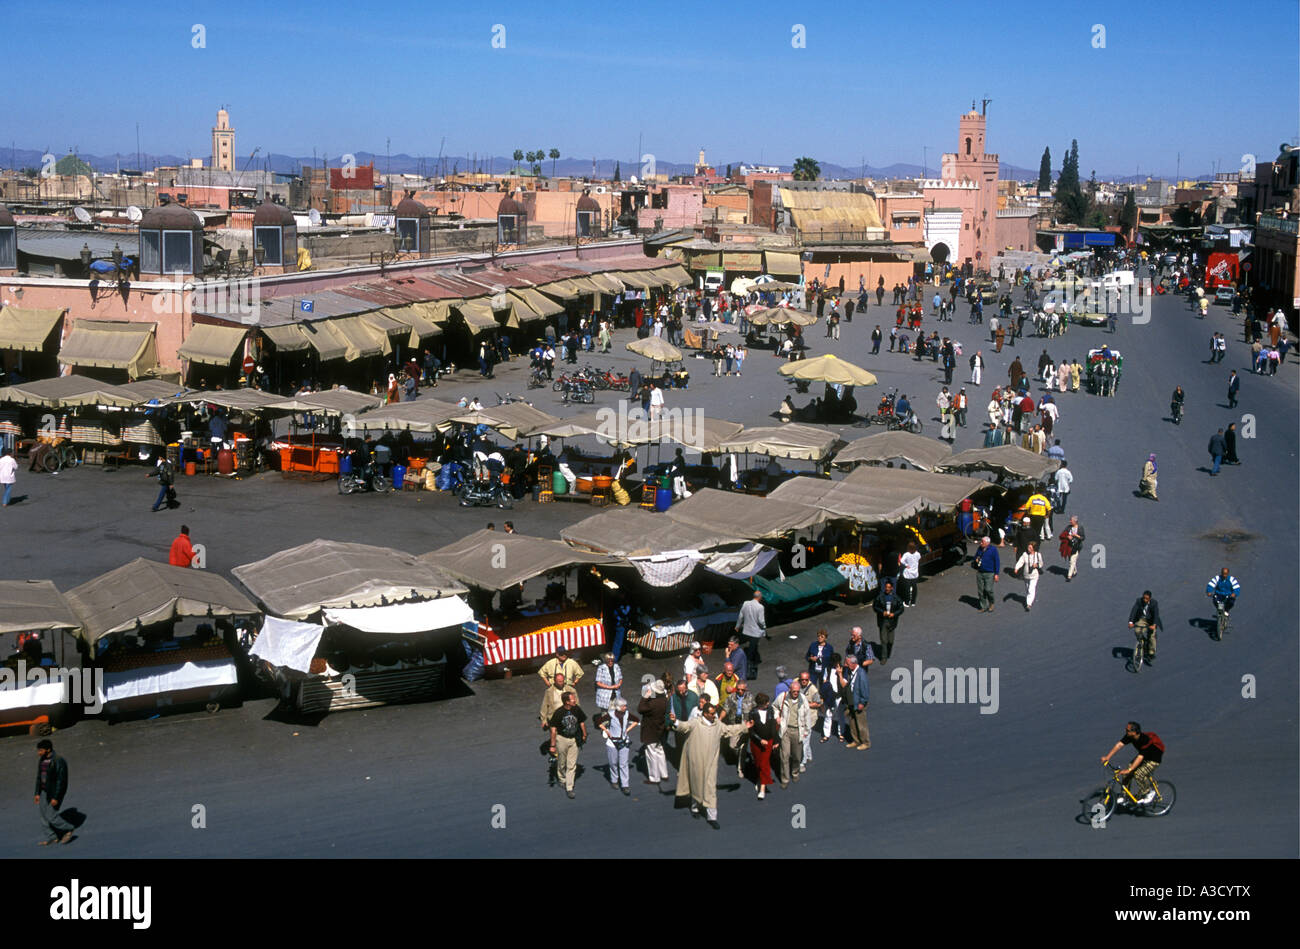 Eine geschäftige Markt-Szene in Place Djemaa el Fna Marrakesch, Marokko Stockfoto